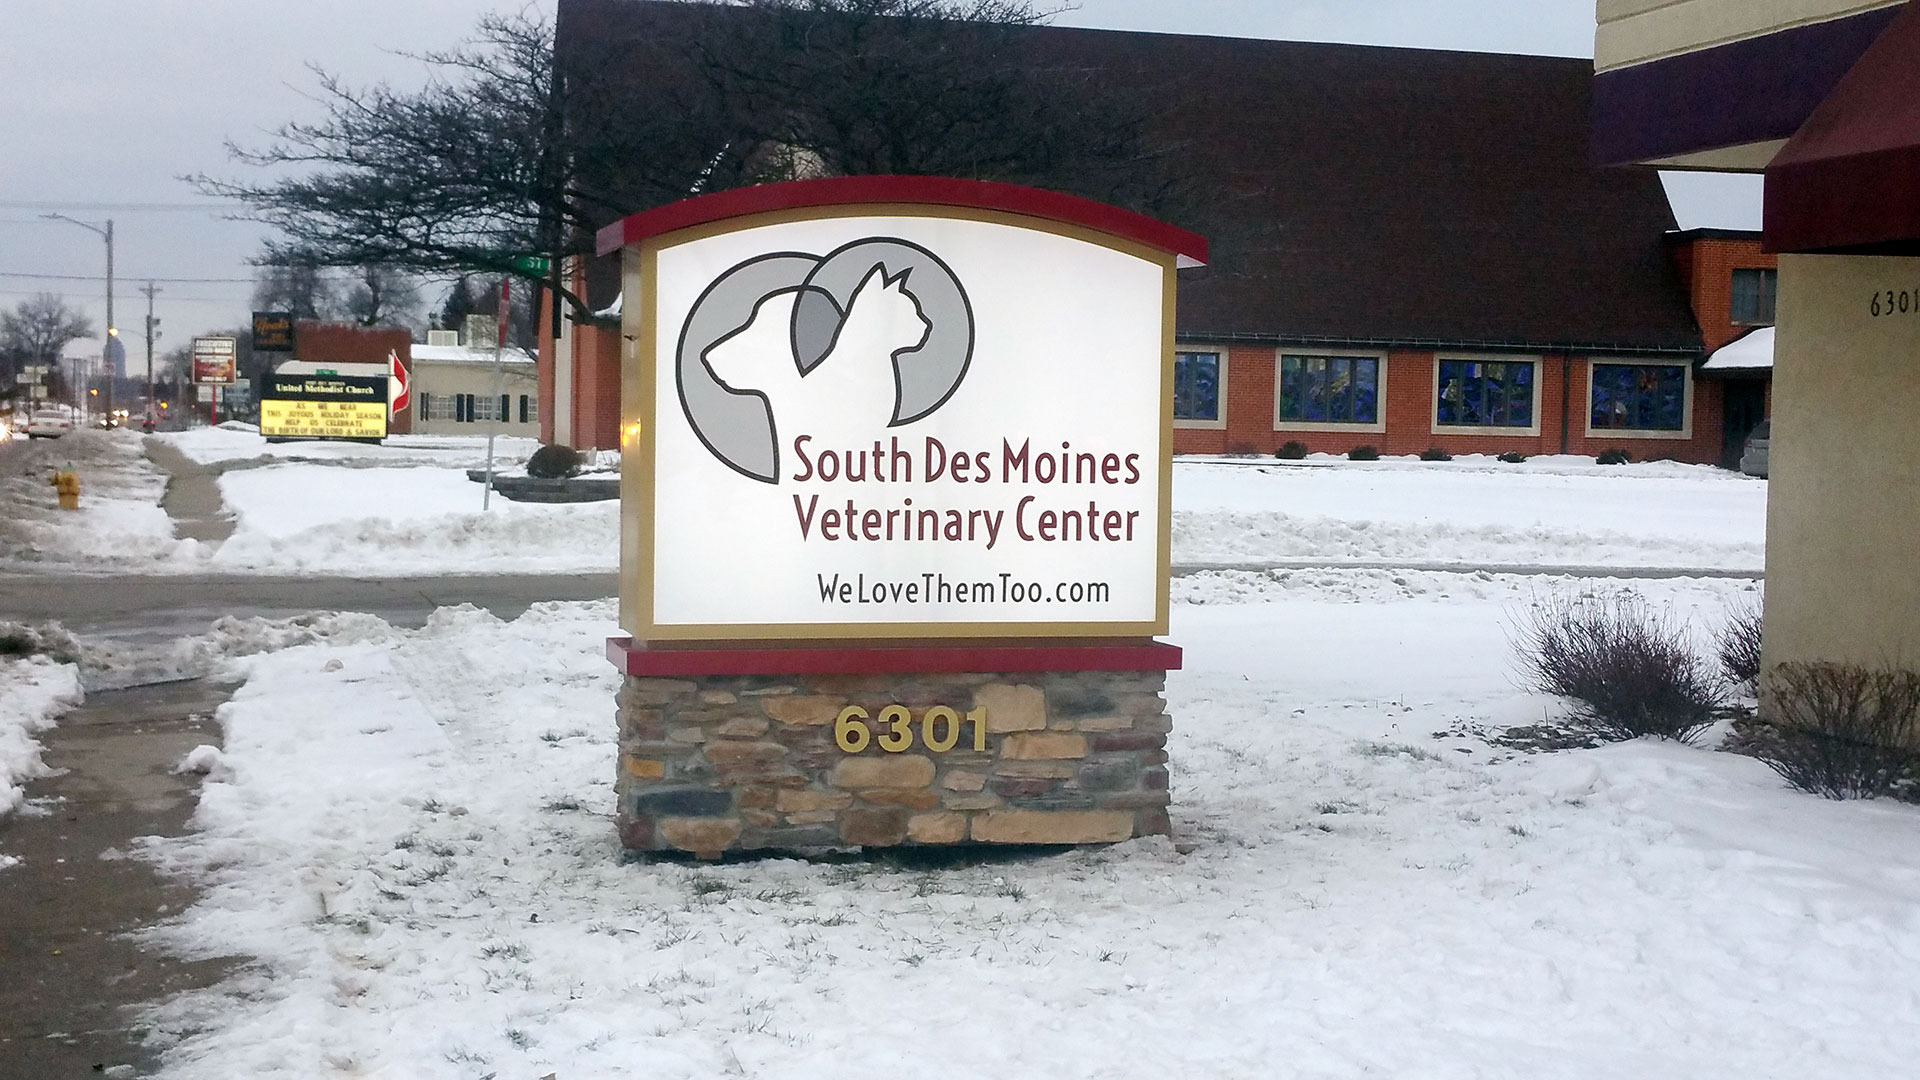 South Des Moines Veterinary Center